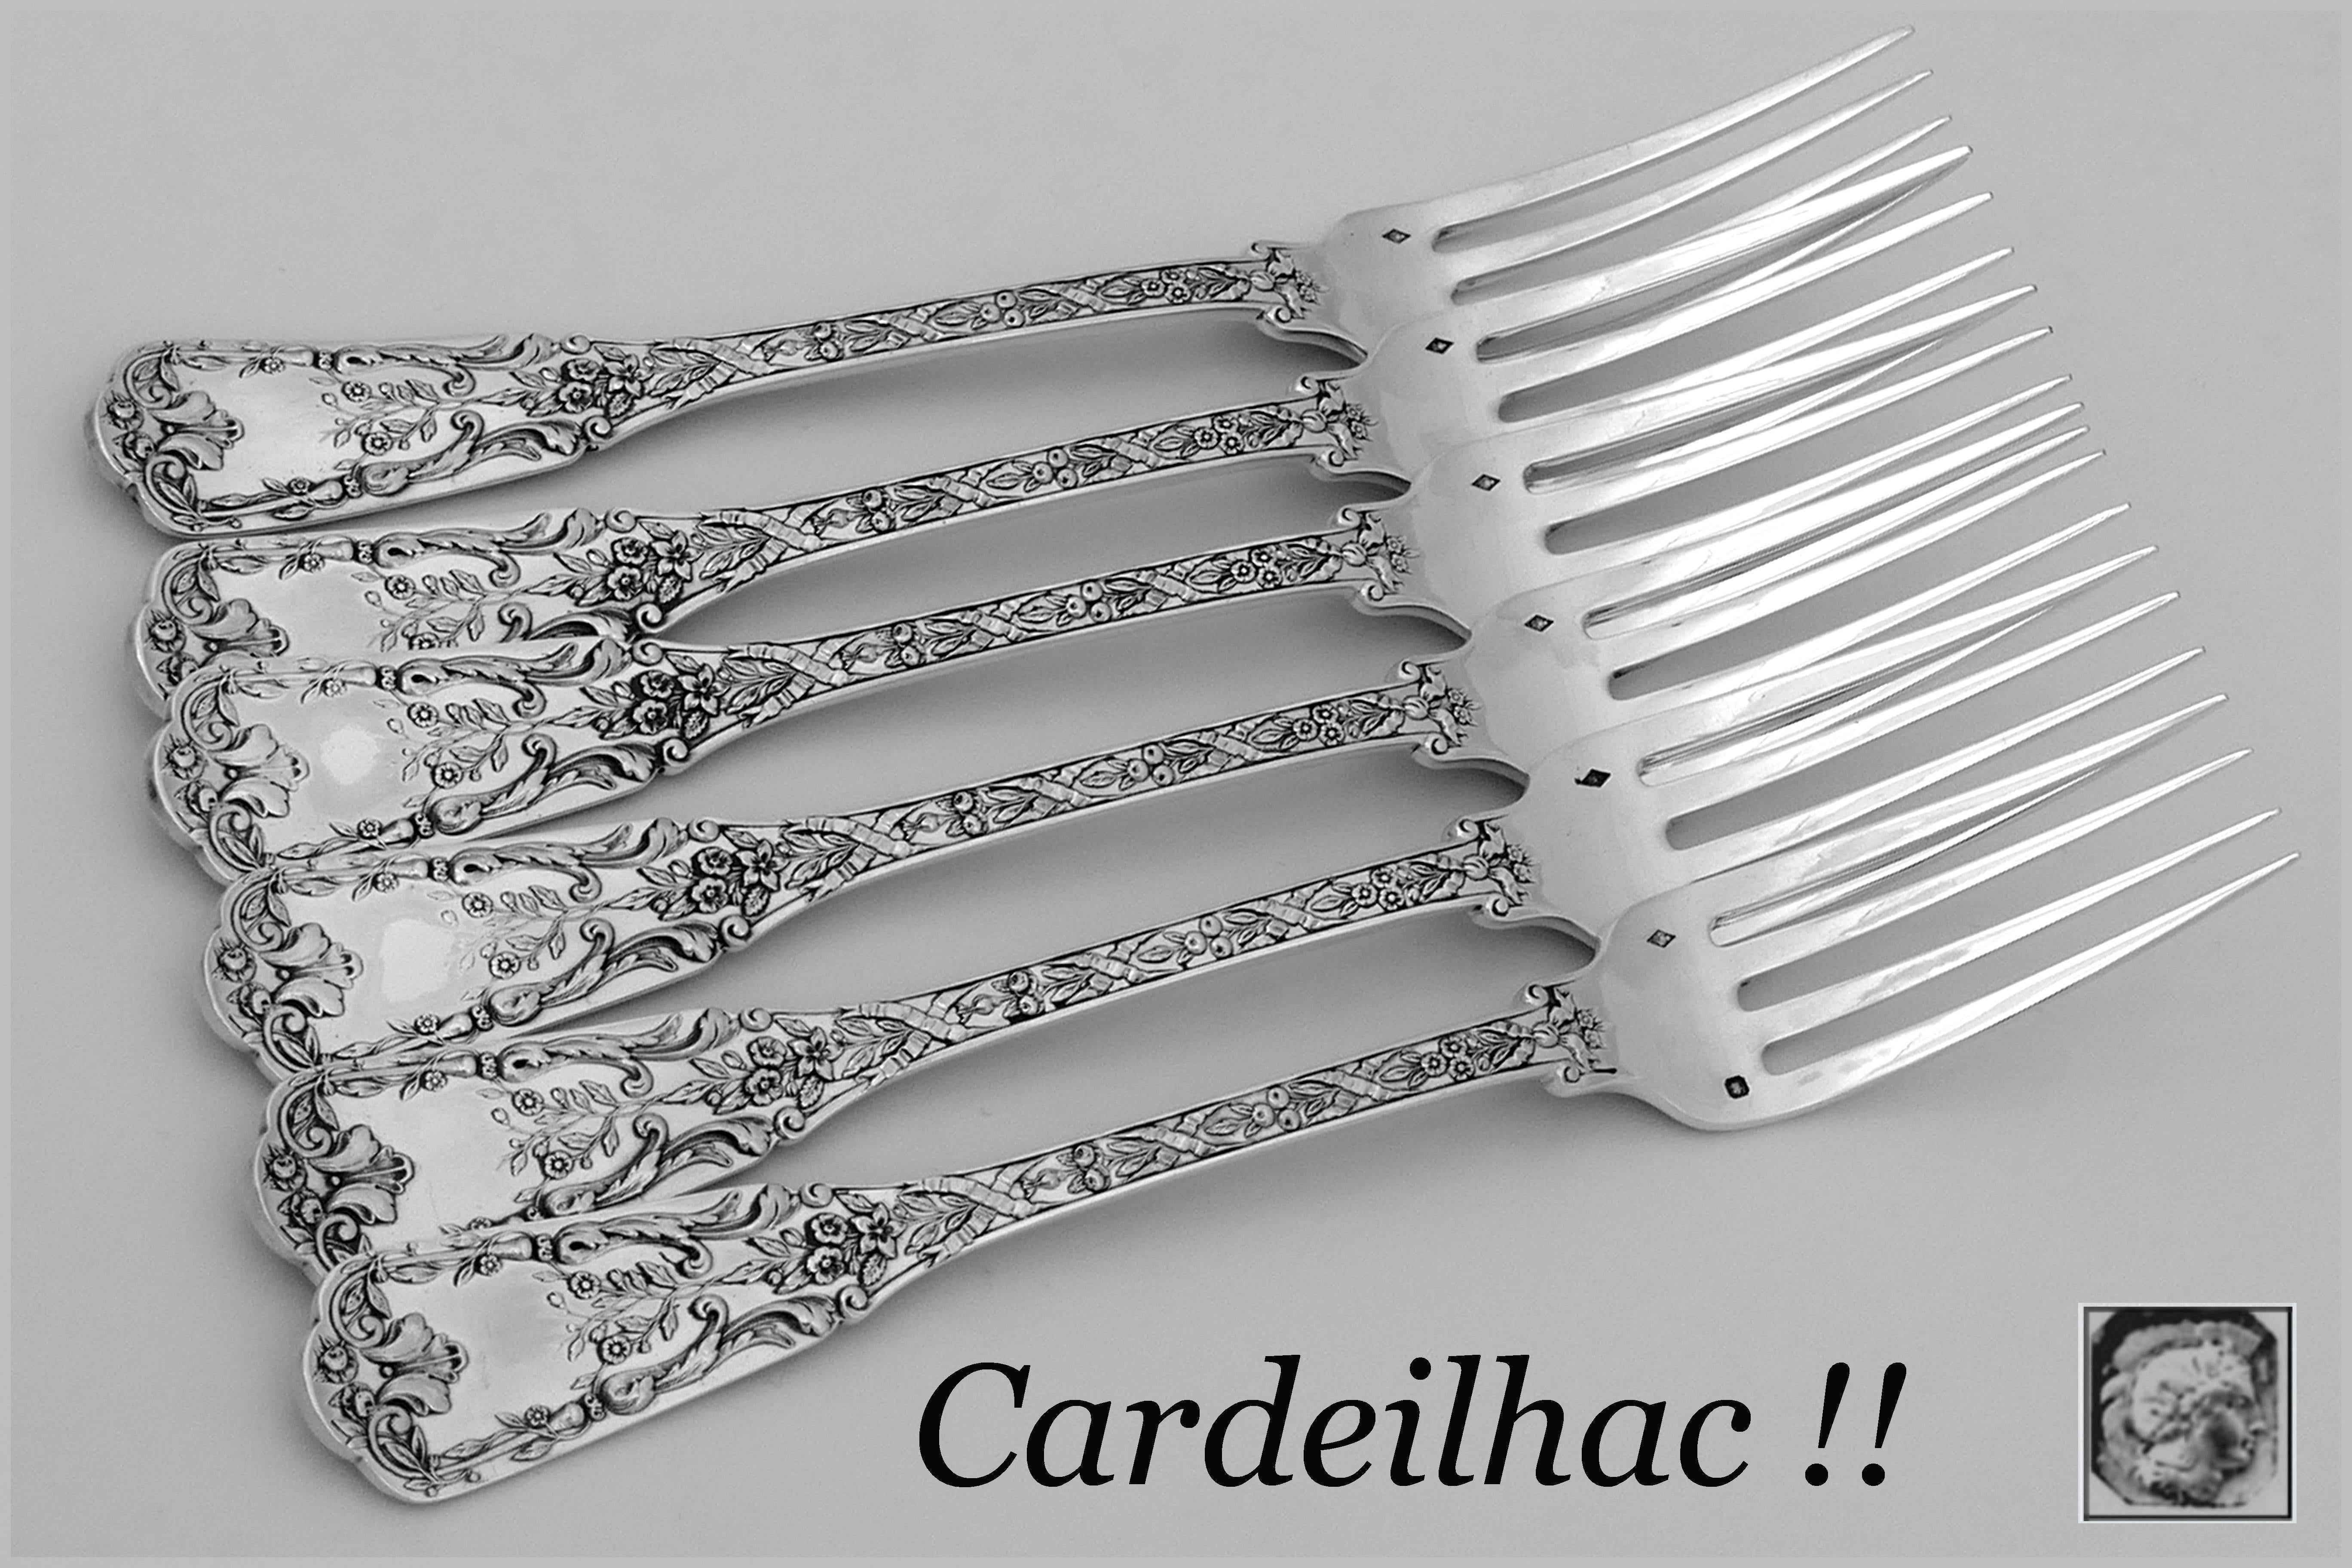 cardeilhac silver